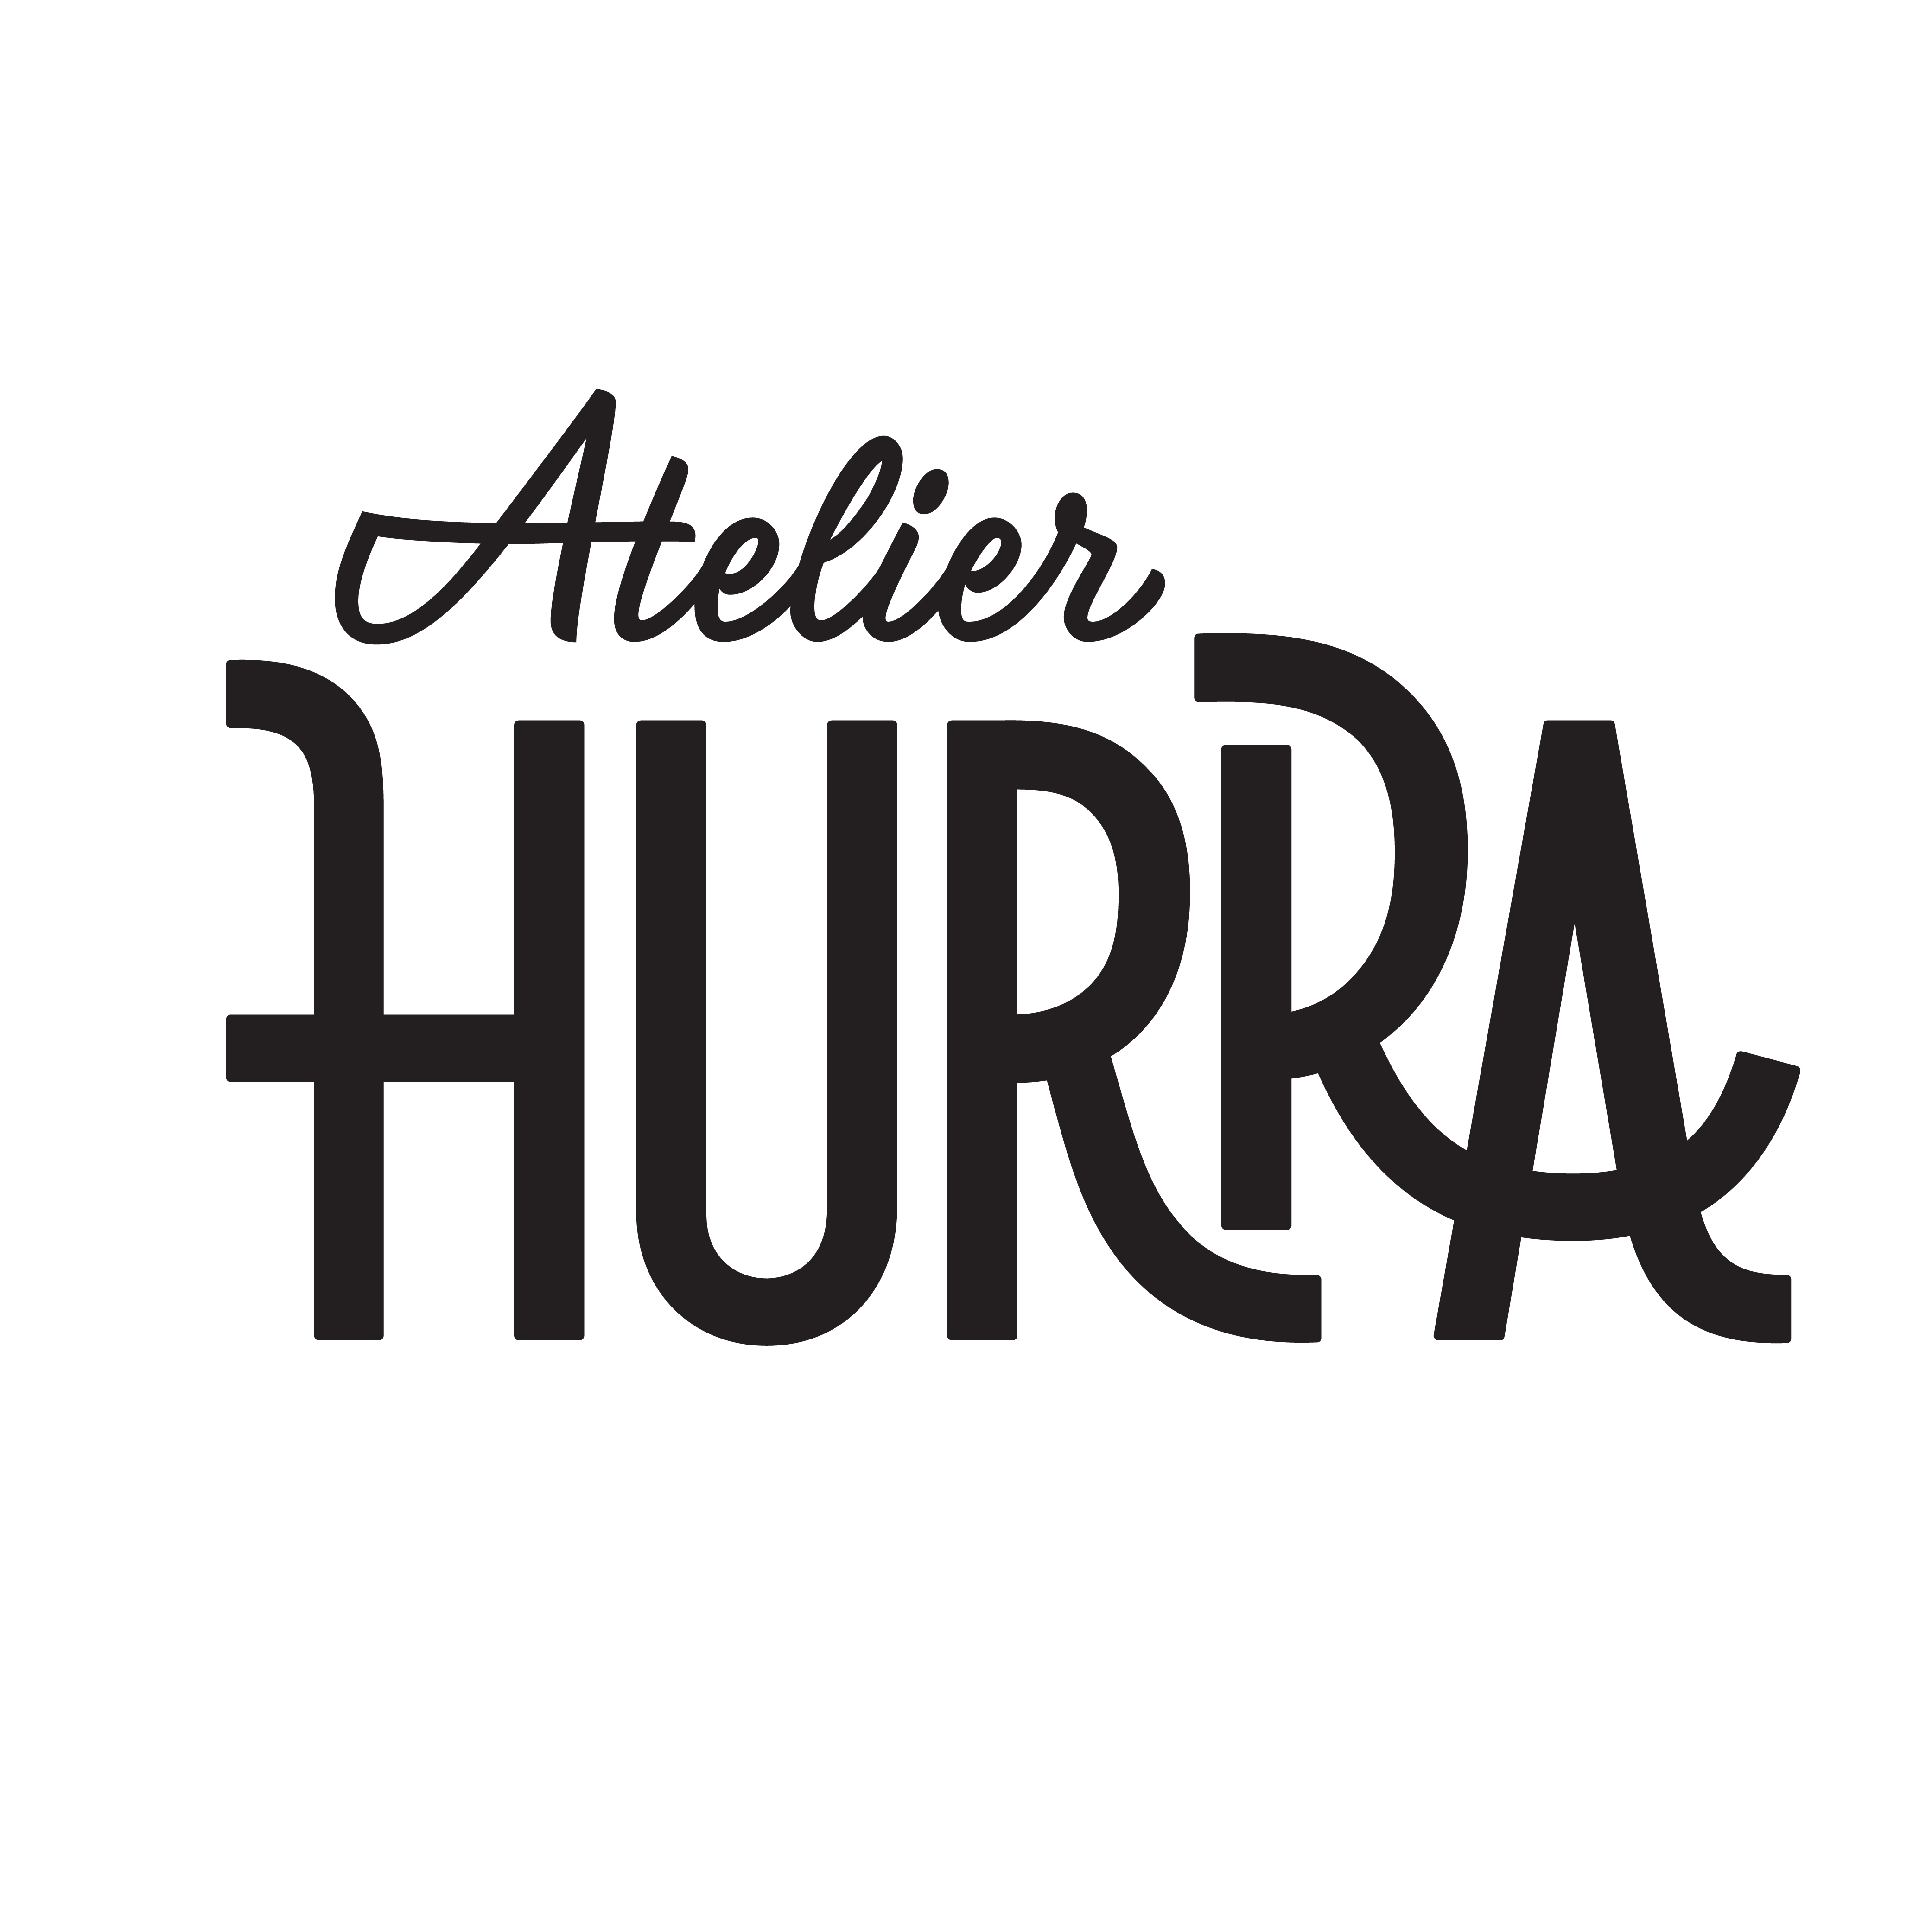 atelier hurra logotype design by Martina Flor